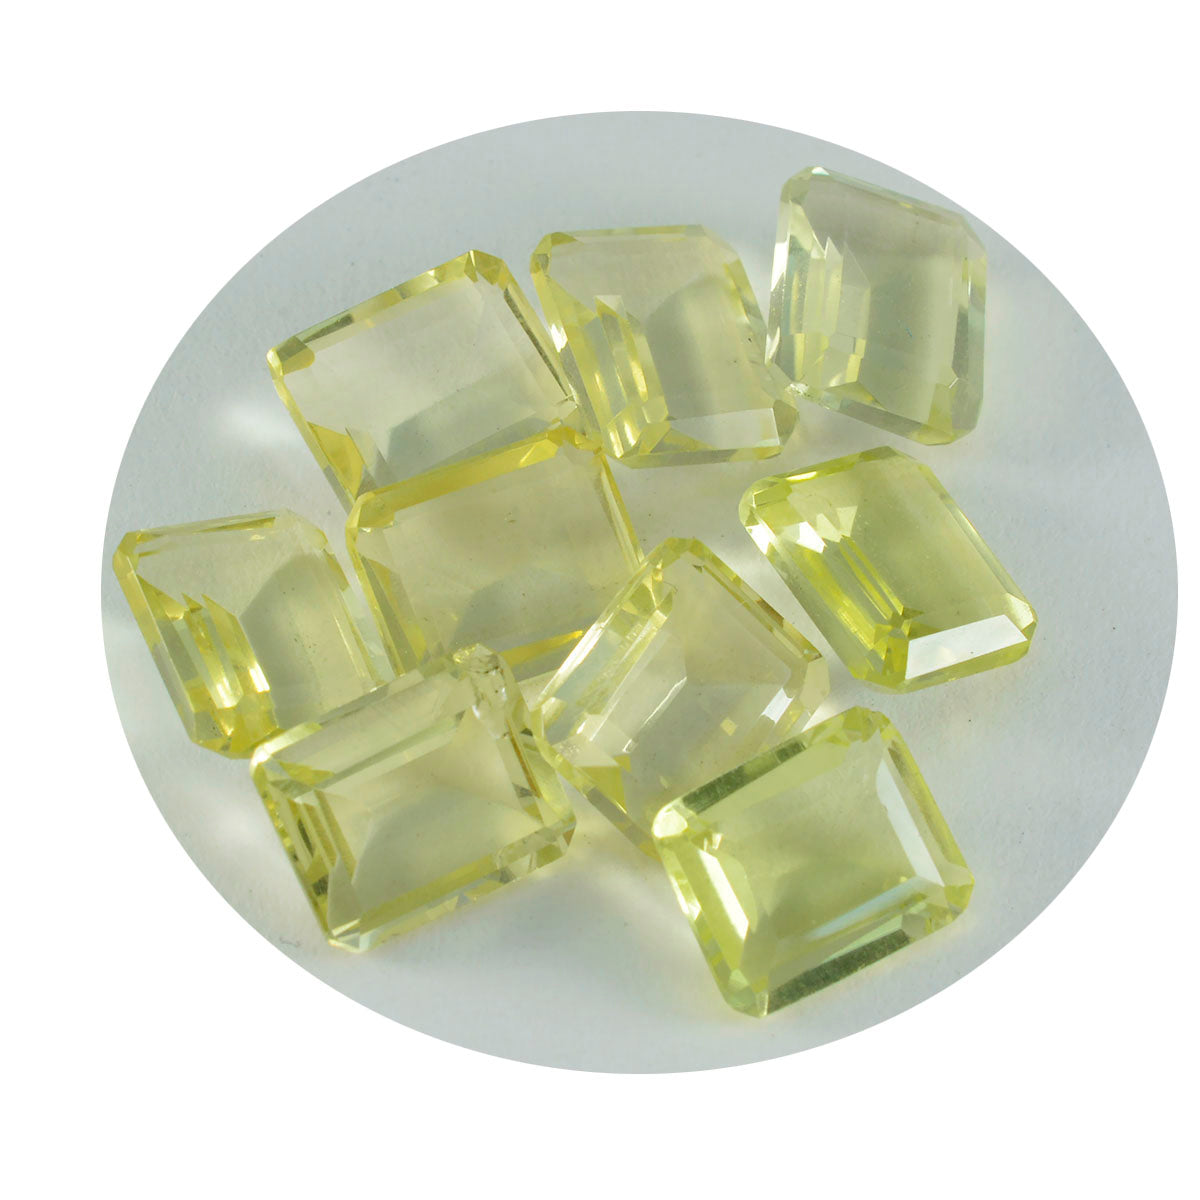 riyogems 1 st gul citron kvarts facetterad 7x9 mm oktagon form god kvalitet pärla